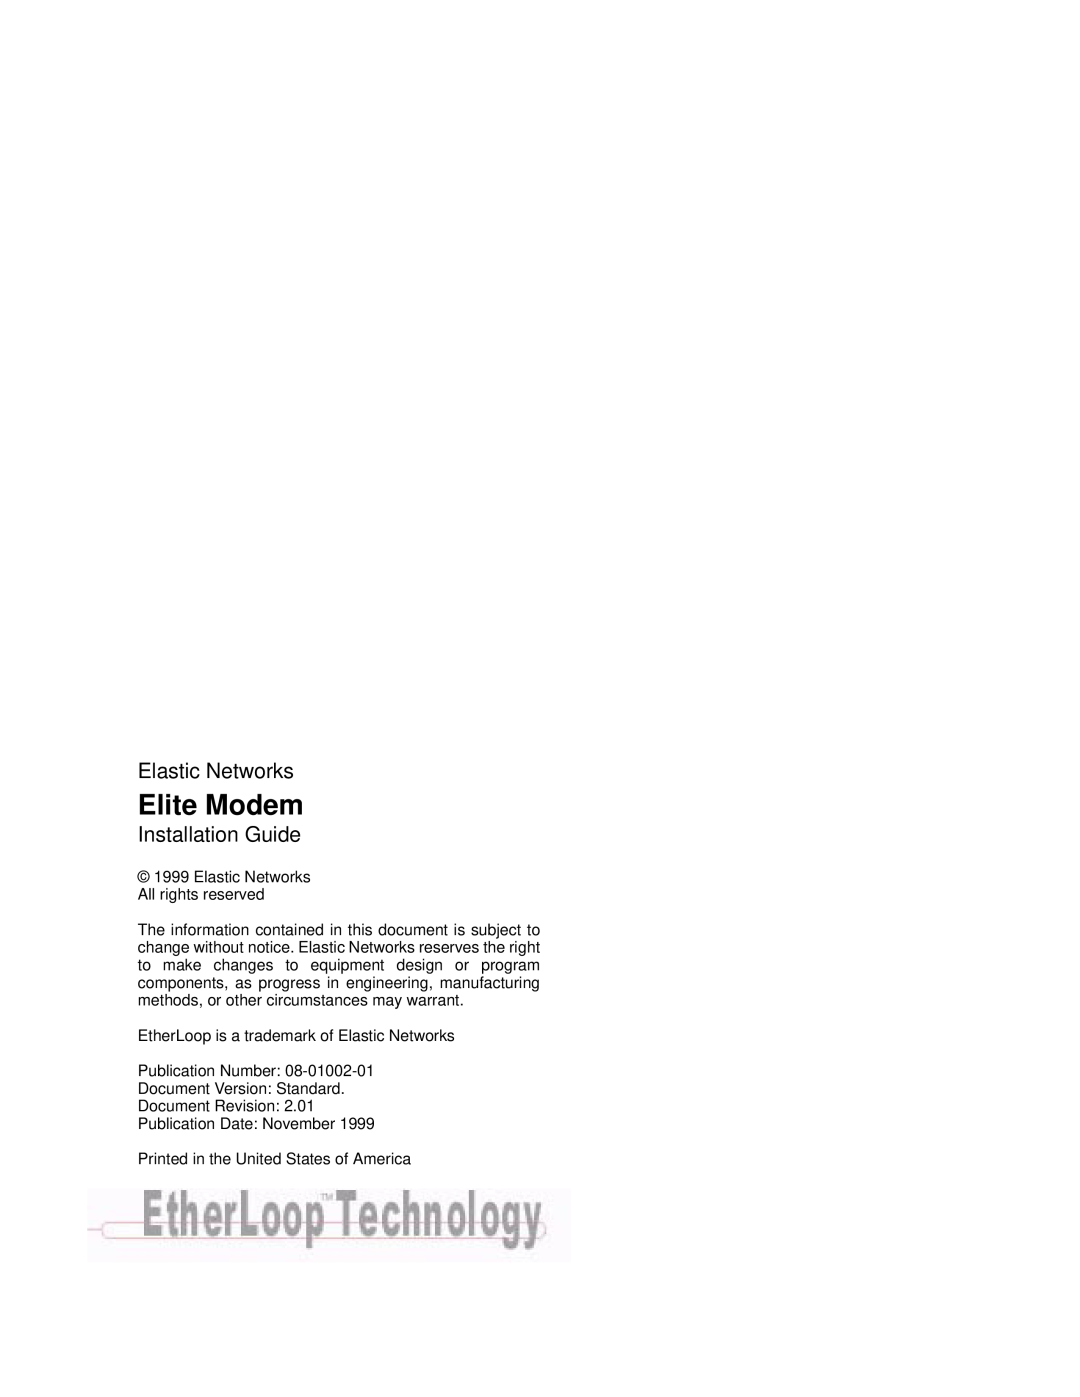 Zhone Technologies 08-01002-01 manual Elite Modem 